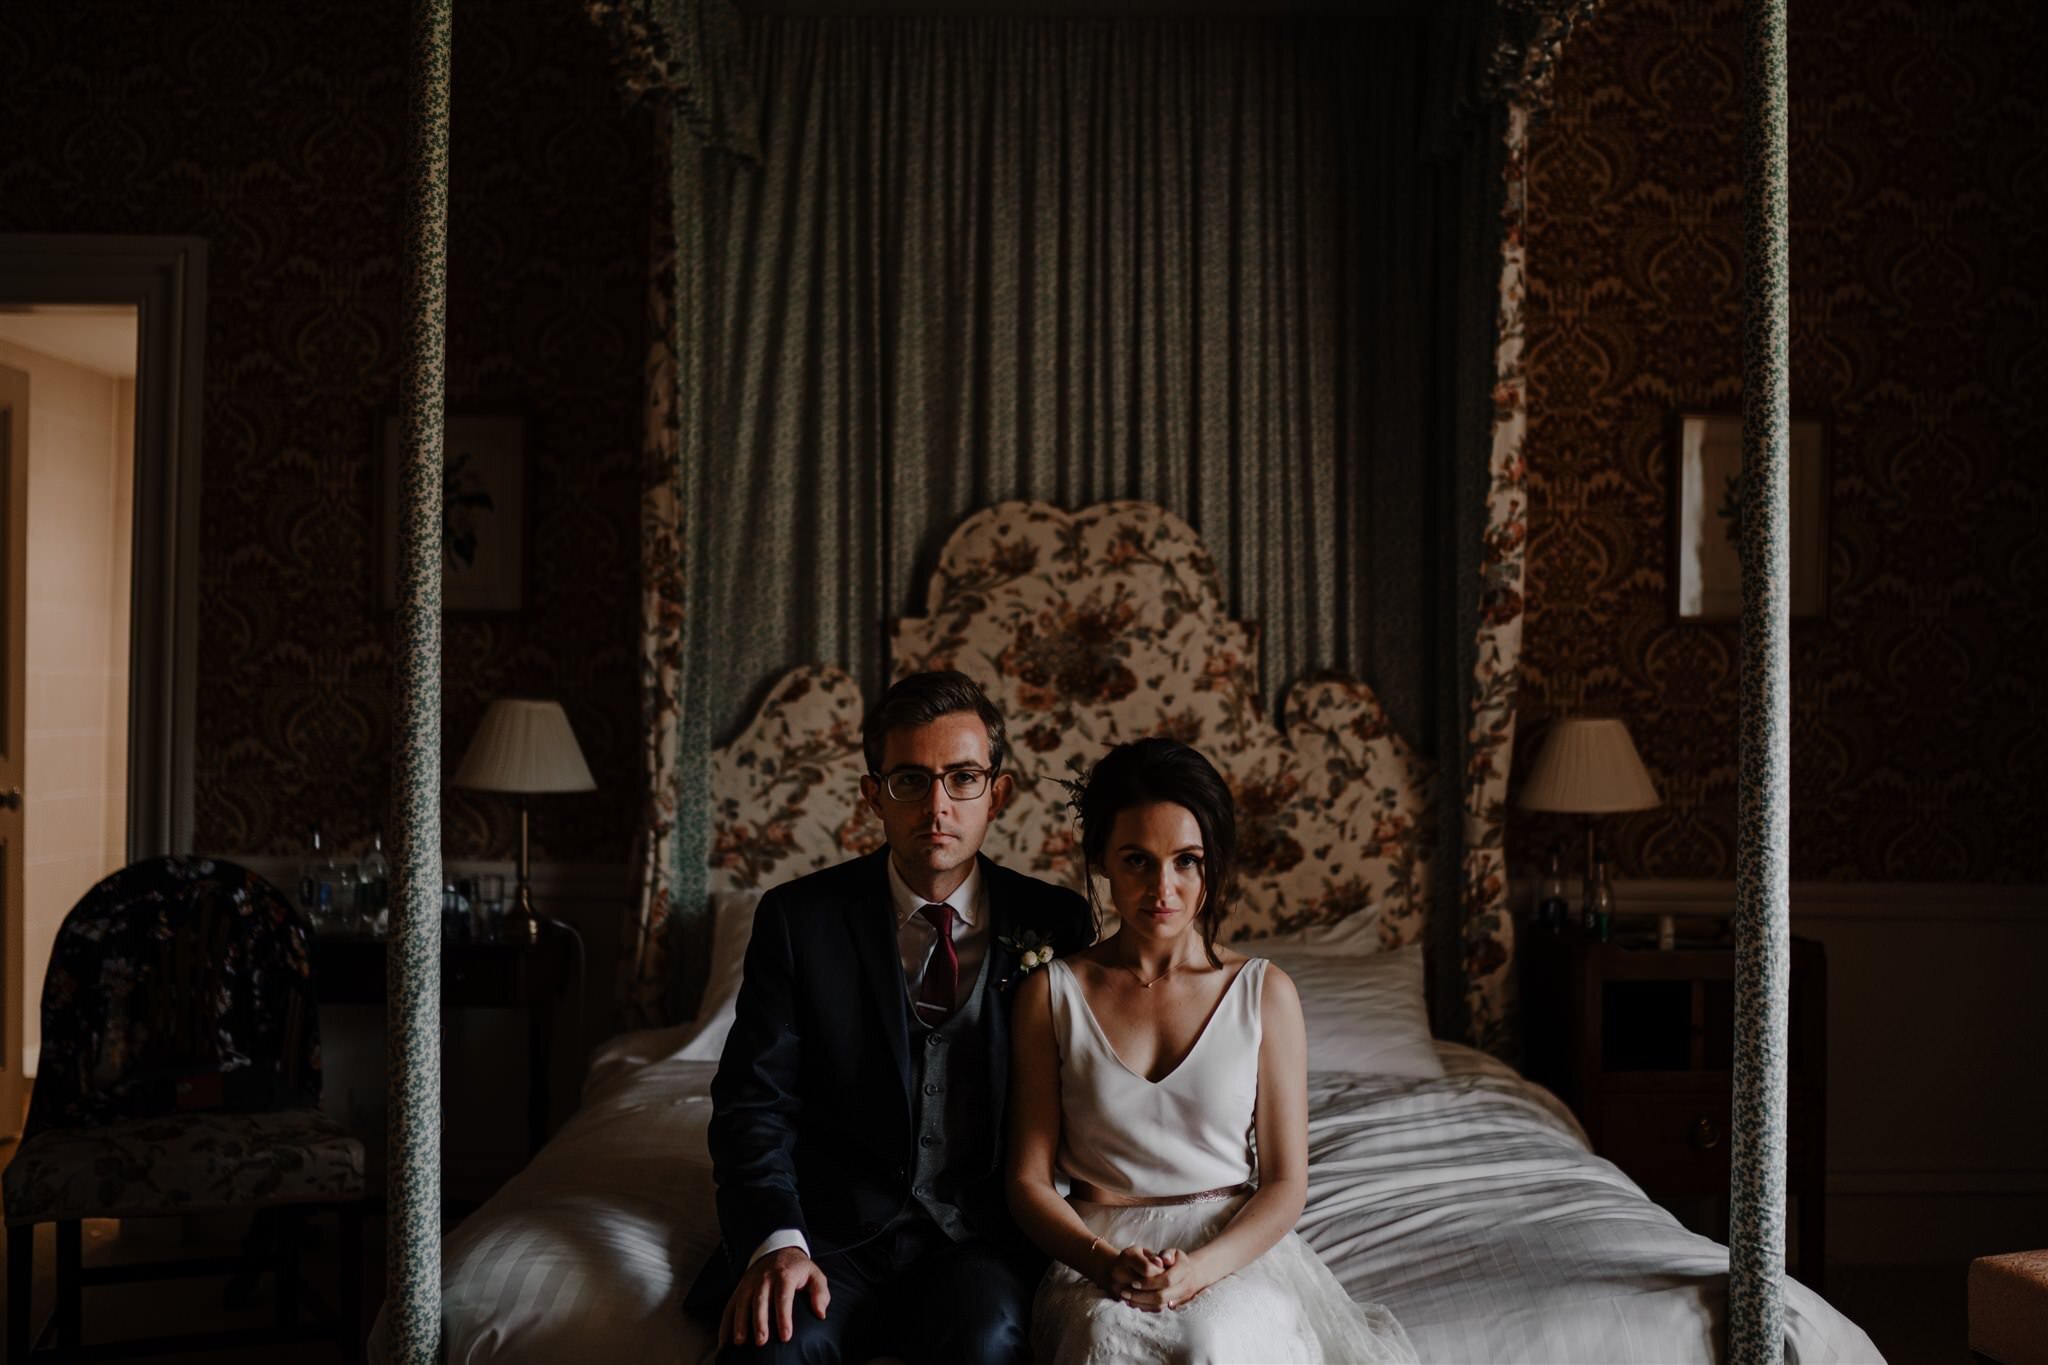 Wes Anderson style wedding portrait bride groom on bed West wing Crom Castle intimate alternative wedding photographers Ireland